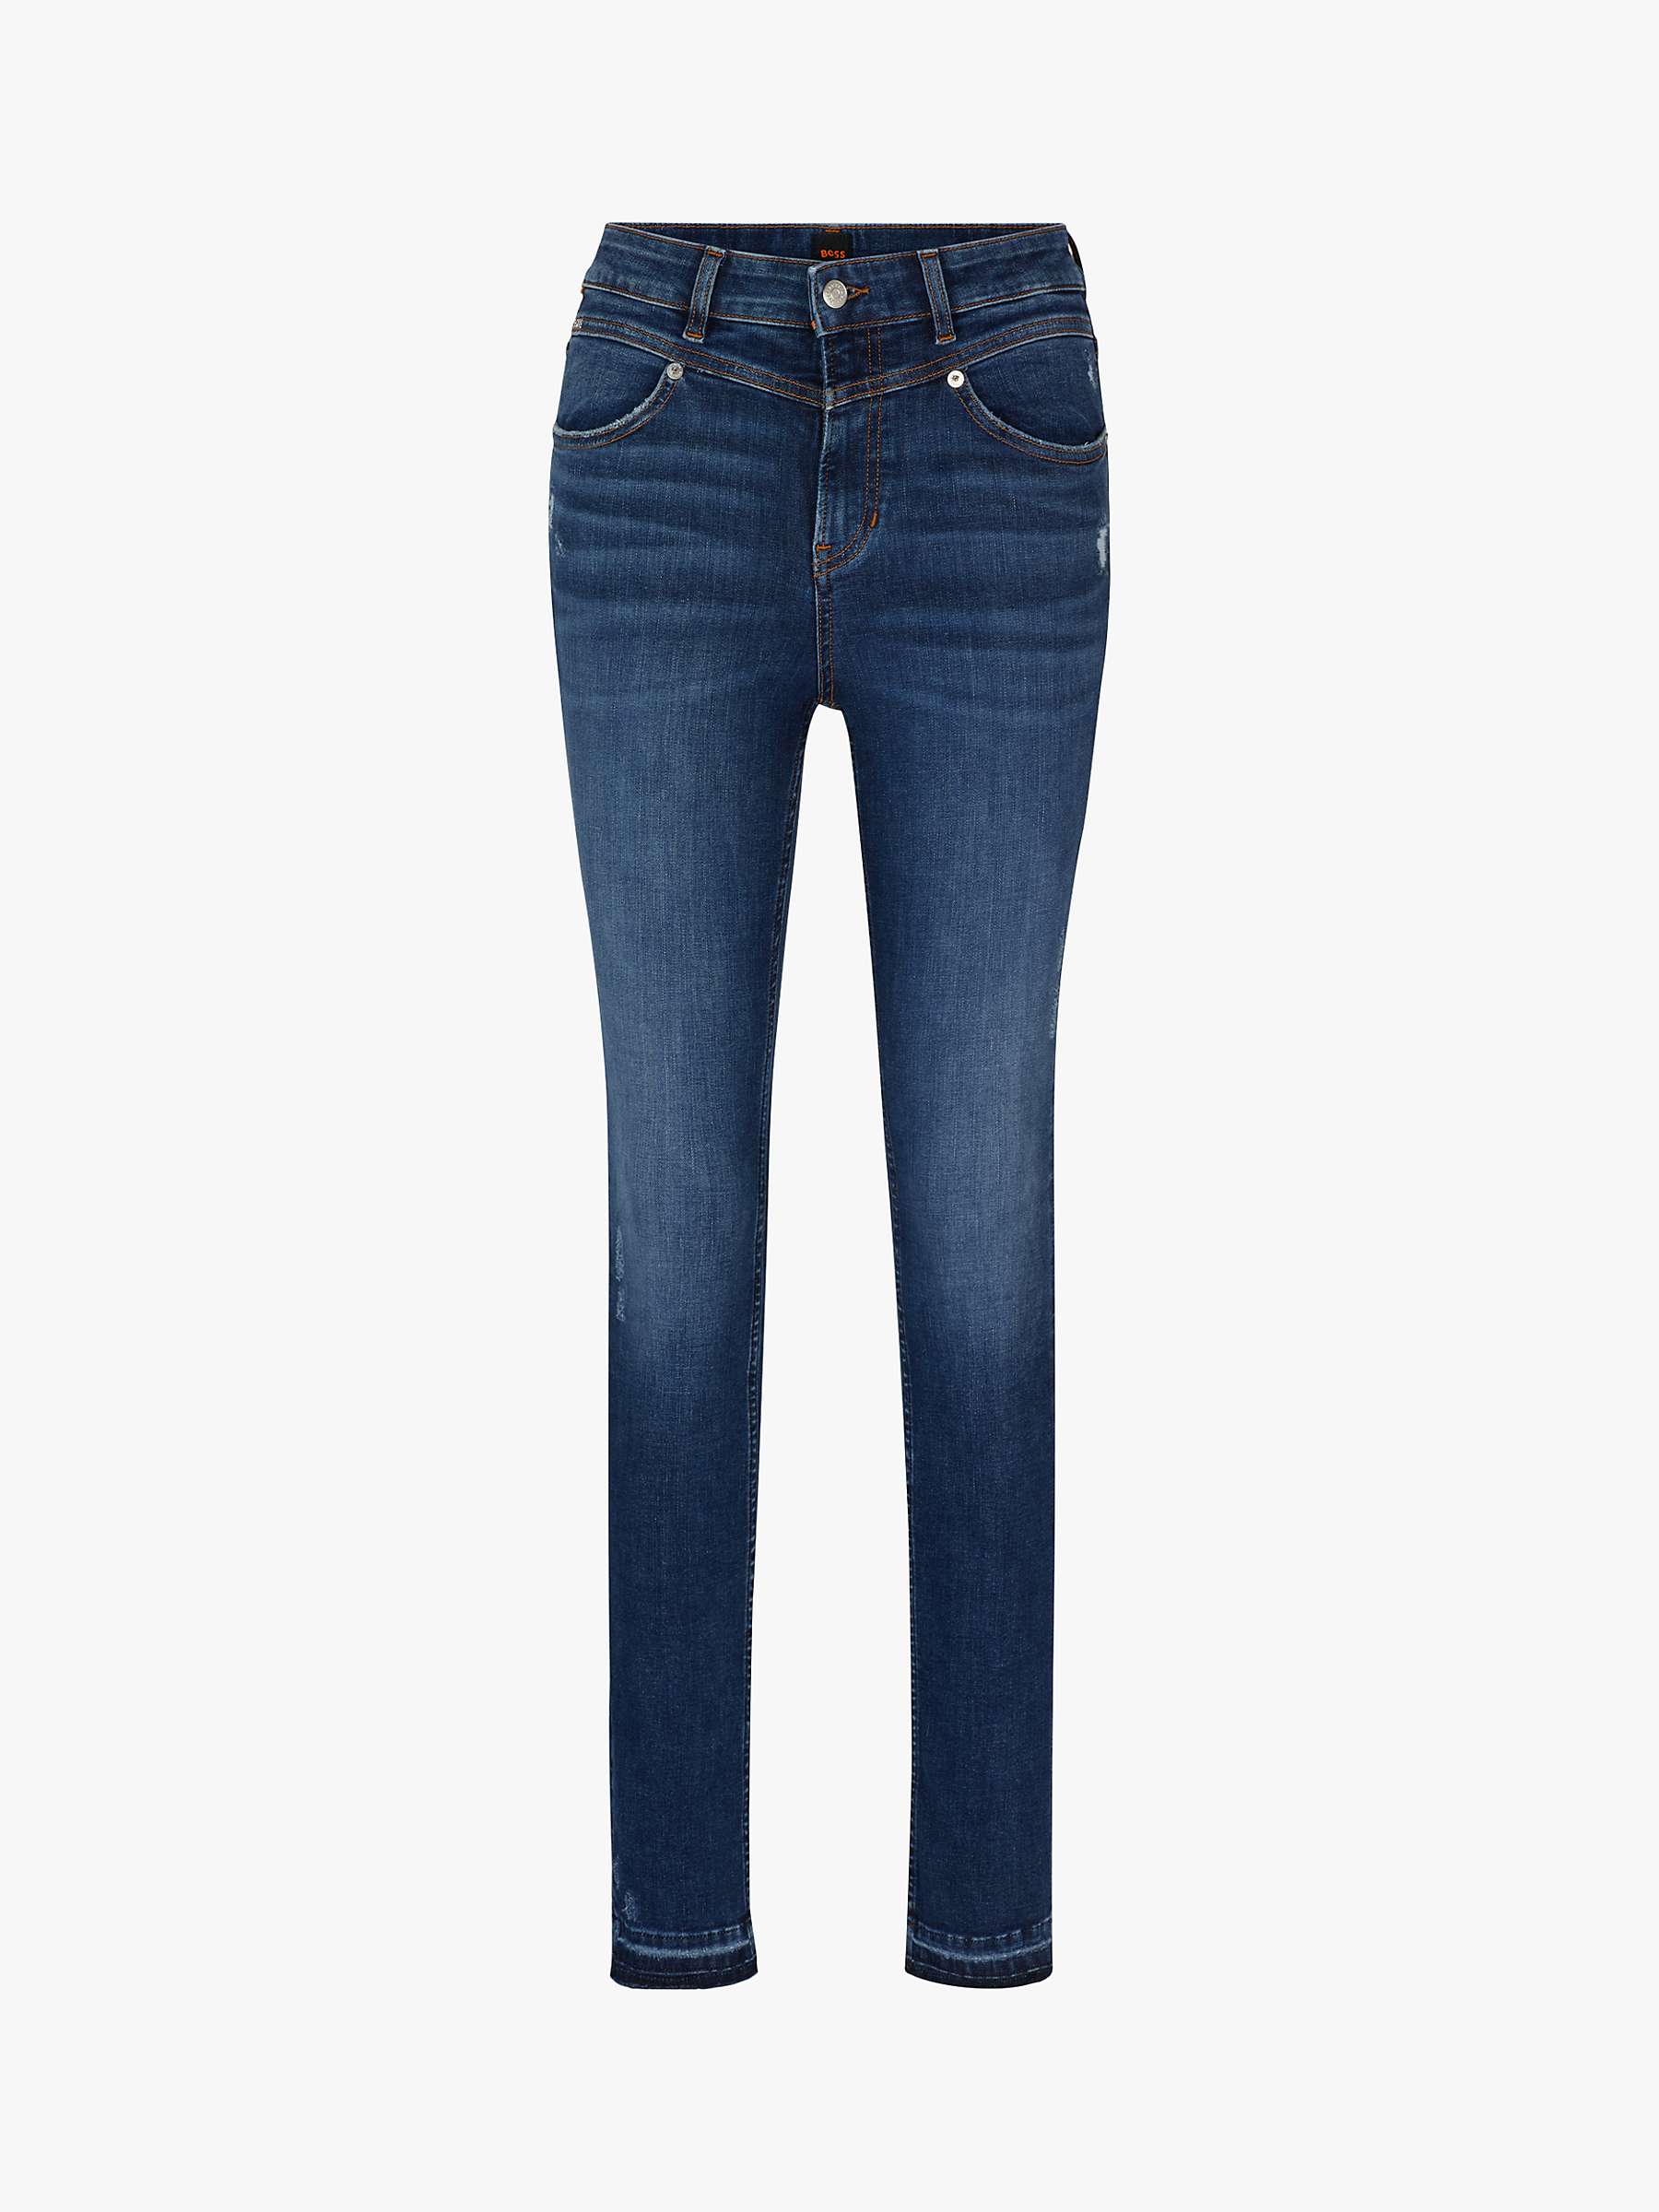 Buy BOSS Cotton Blend Skinny Jeans, Navy Online at johnlewis.com